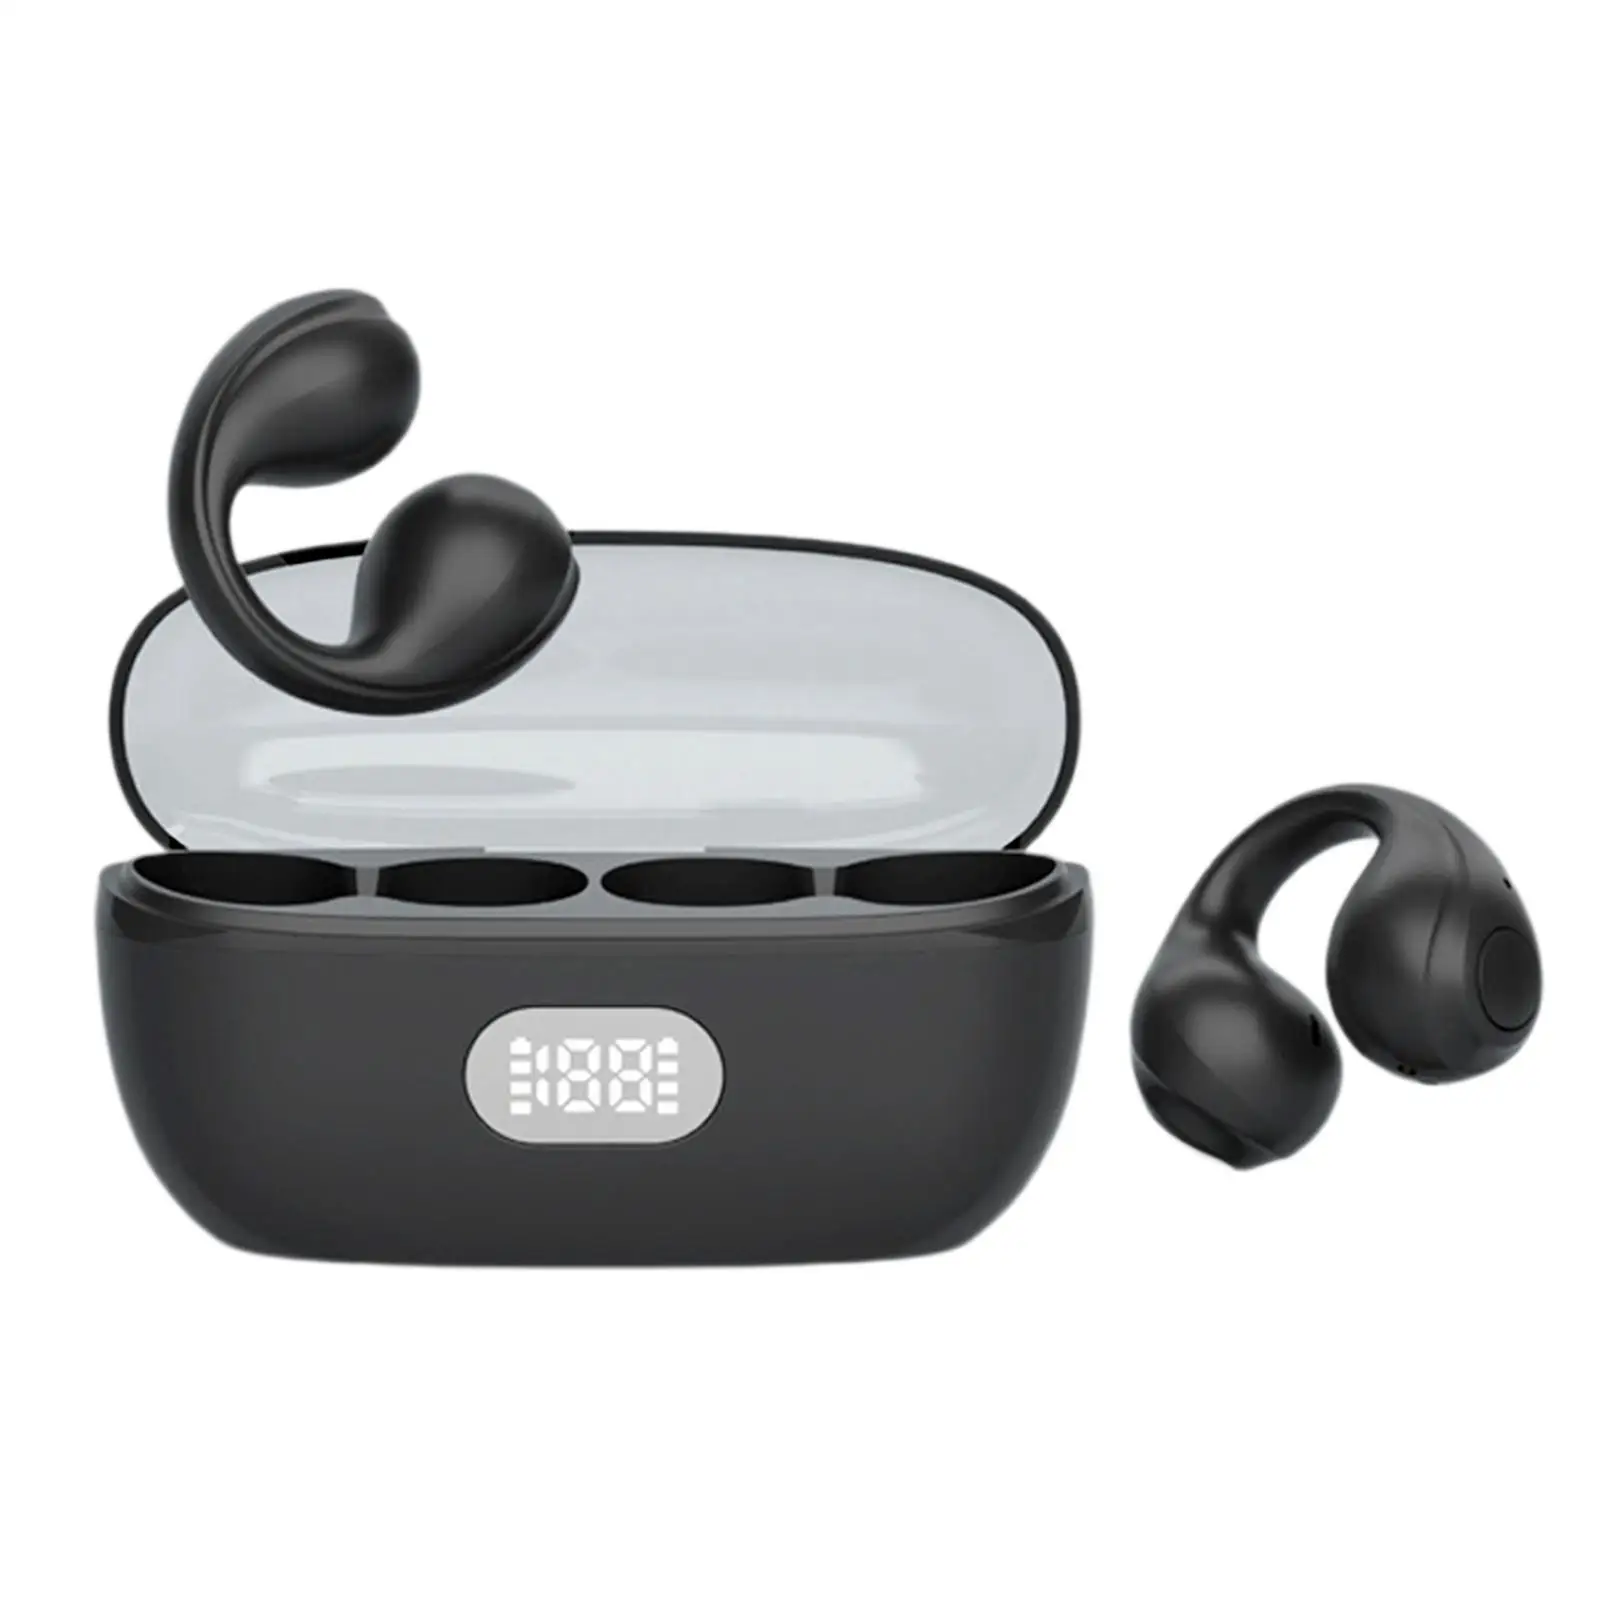 Wireless Clip On Headphones V5.3 Low Latency Open Ear Headphones for Workout Business